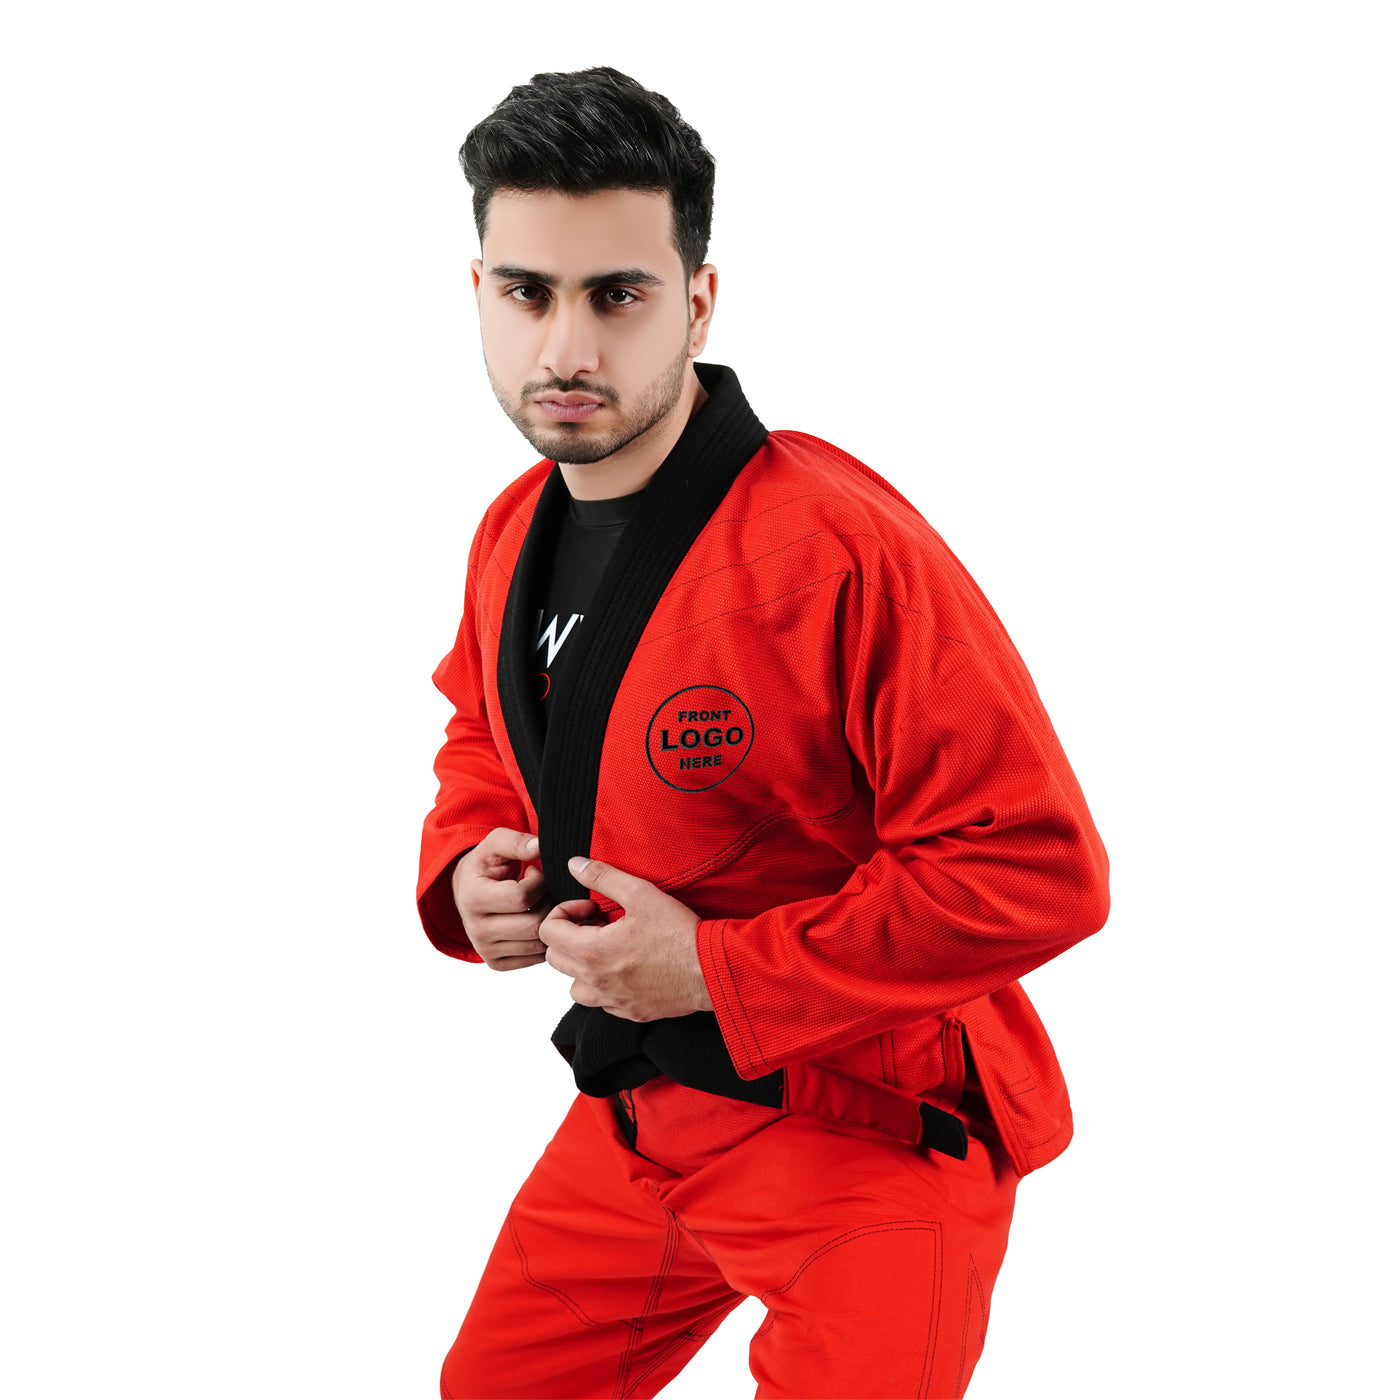 Premium Custom Red with Black Lapel Brazilian Jiu Jitsu Gi